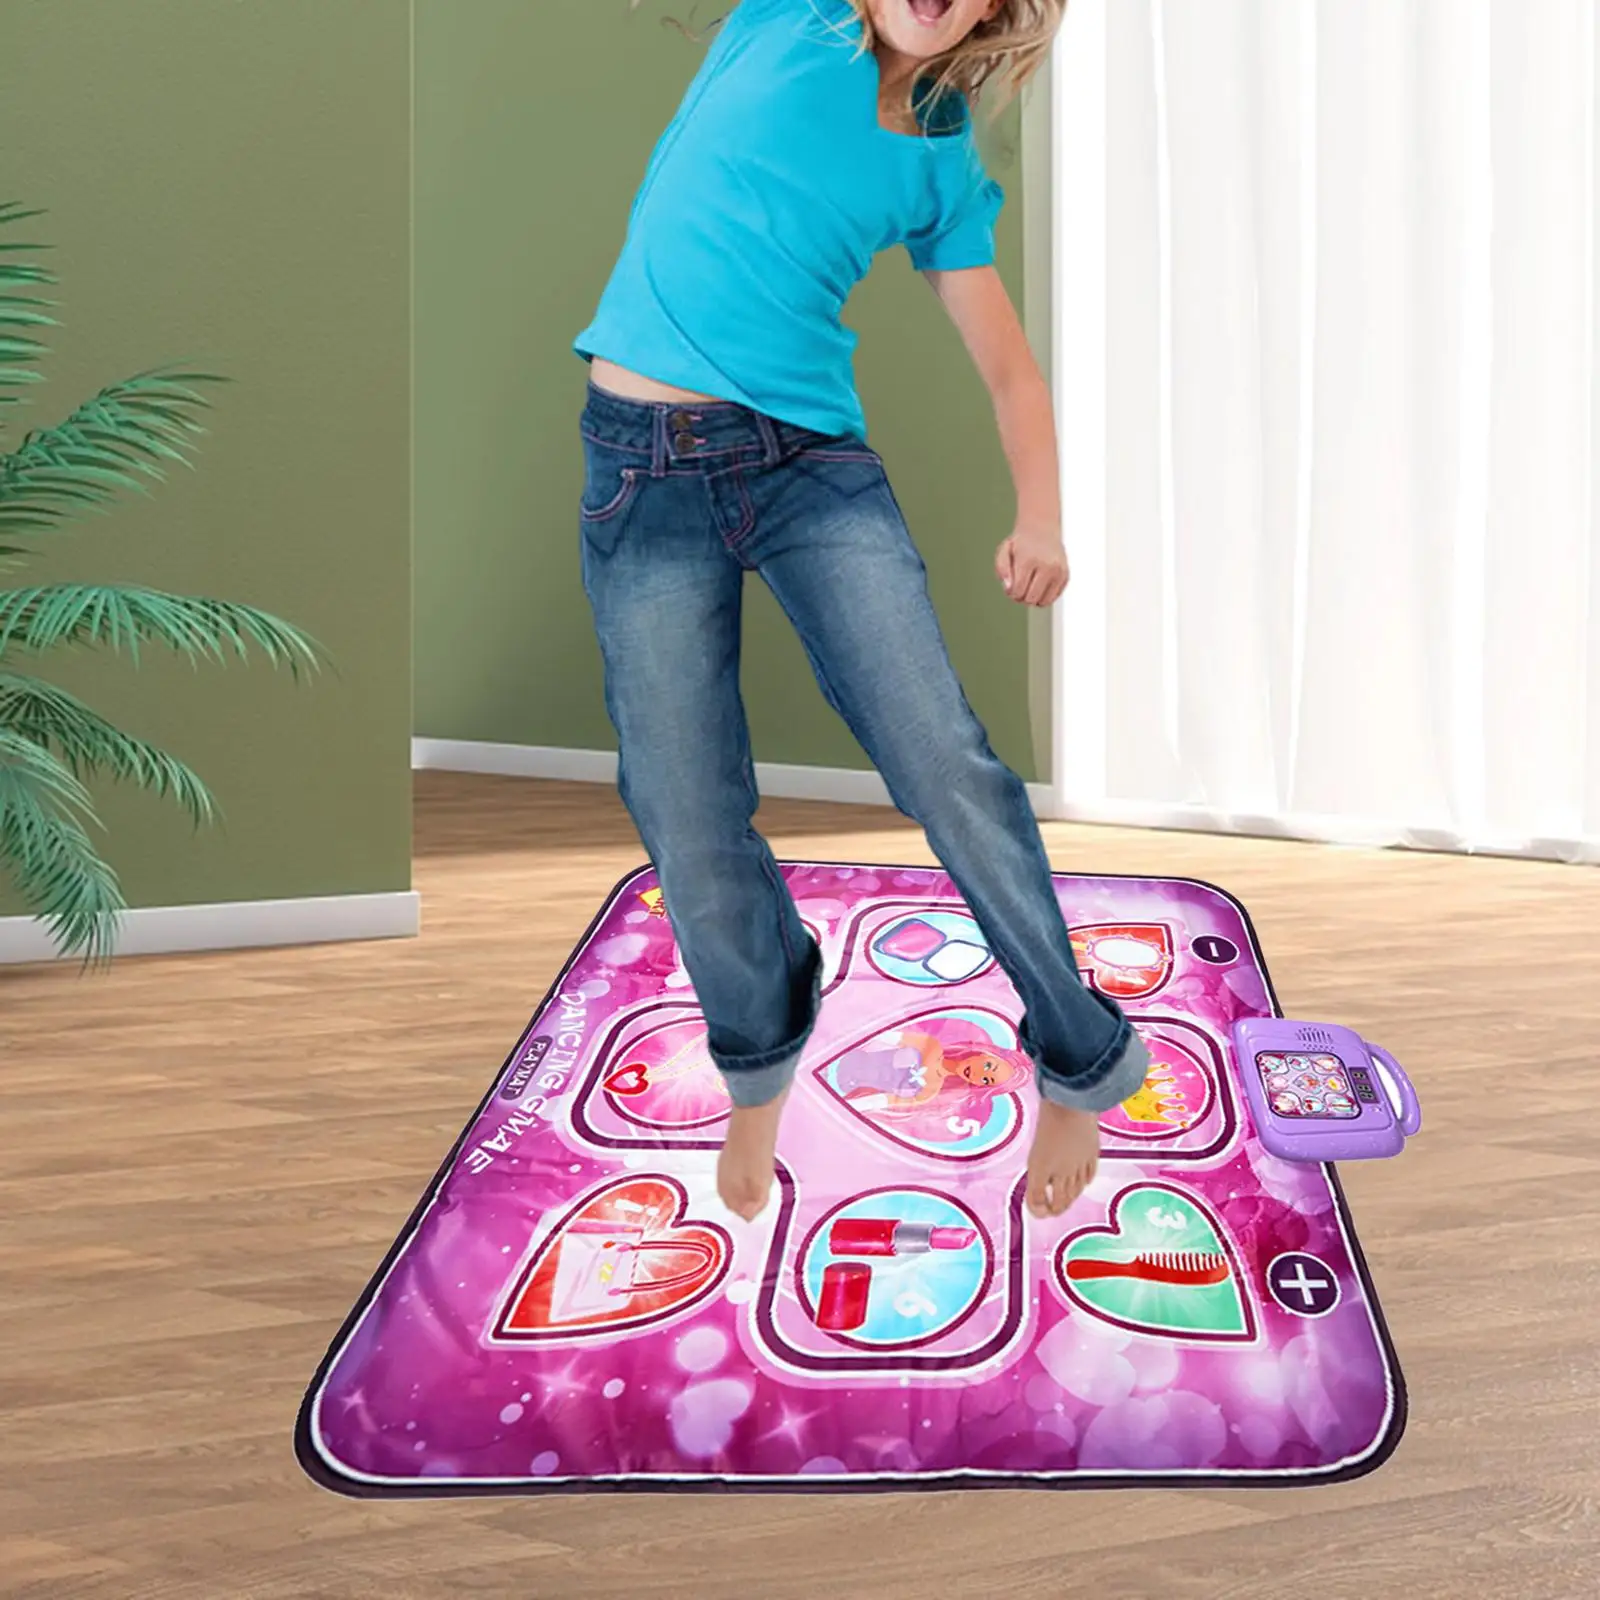 Dance Pad Activity Pad Dancing Blanket Dance Mat Toys for Children Boys Kids